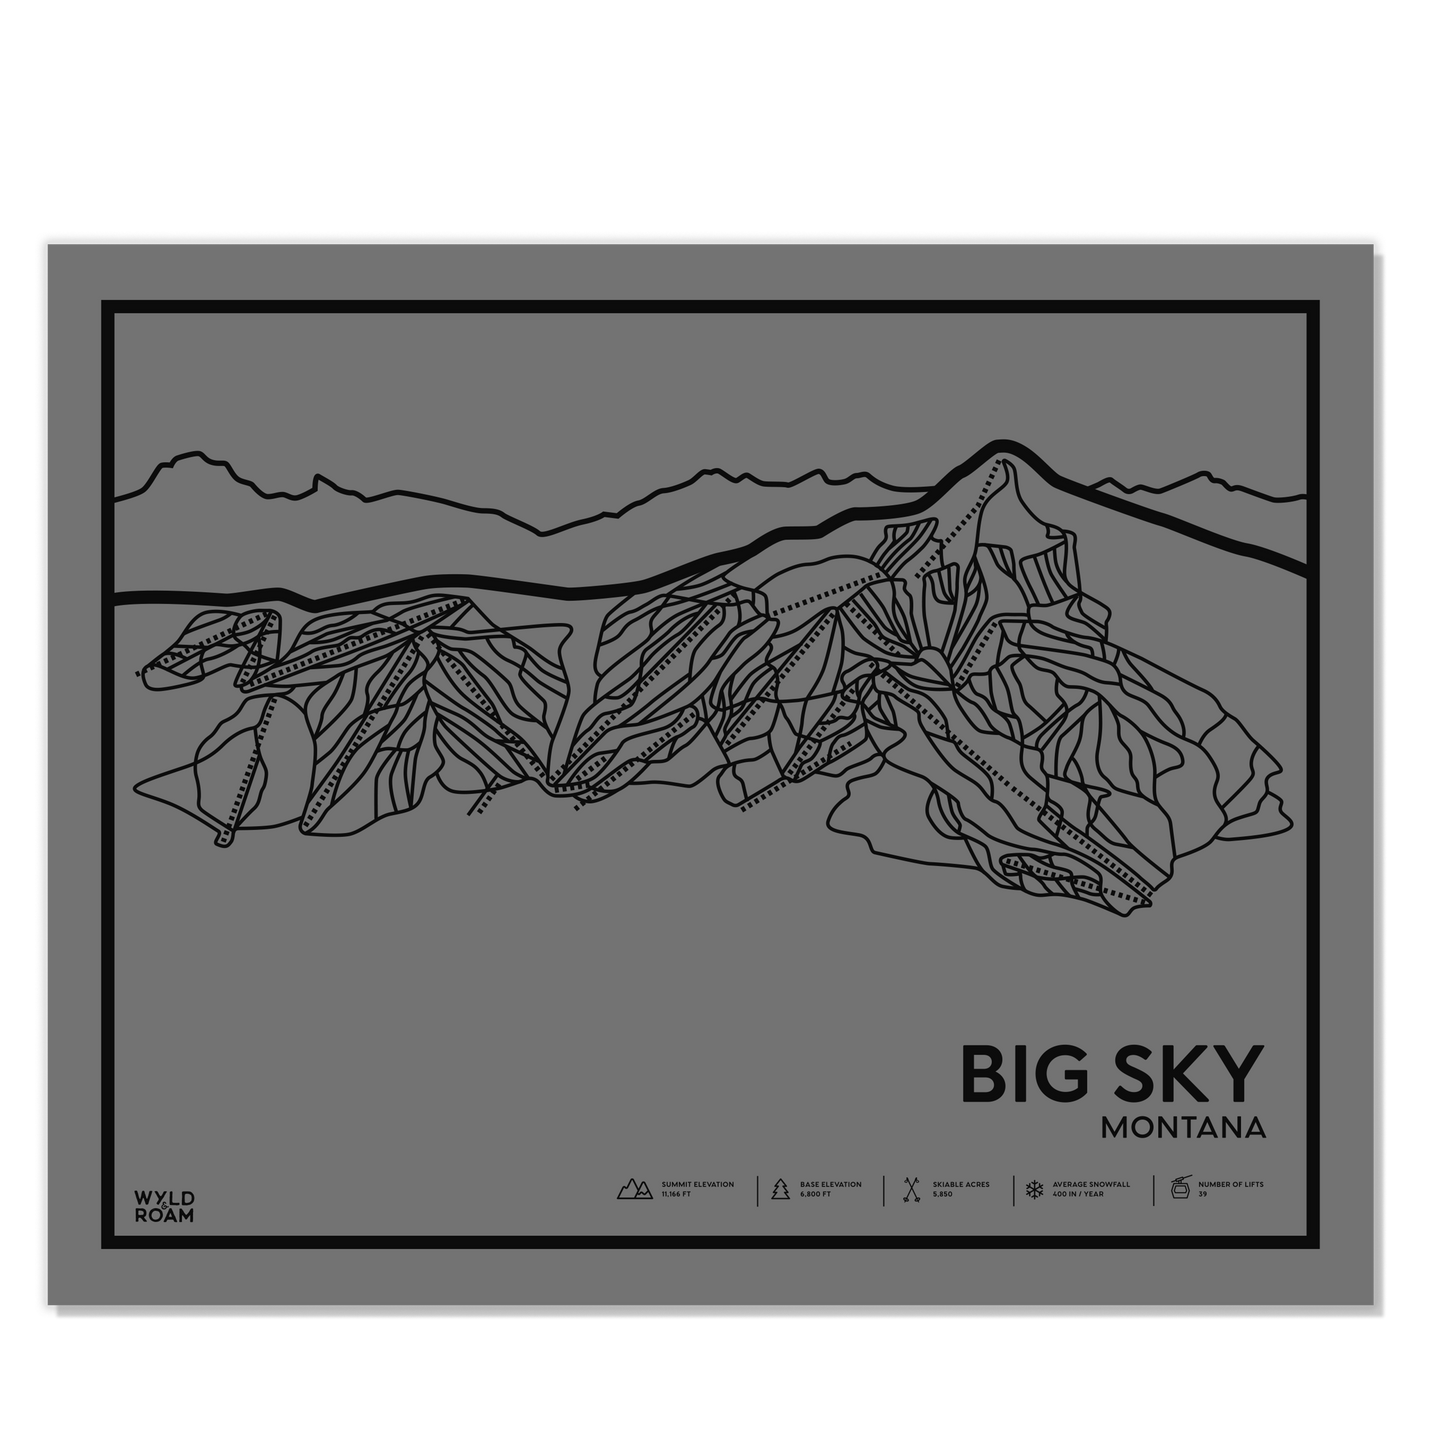 Big Sky Trail Map